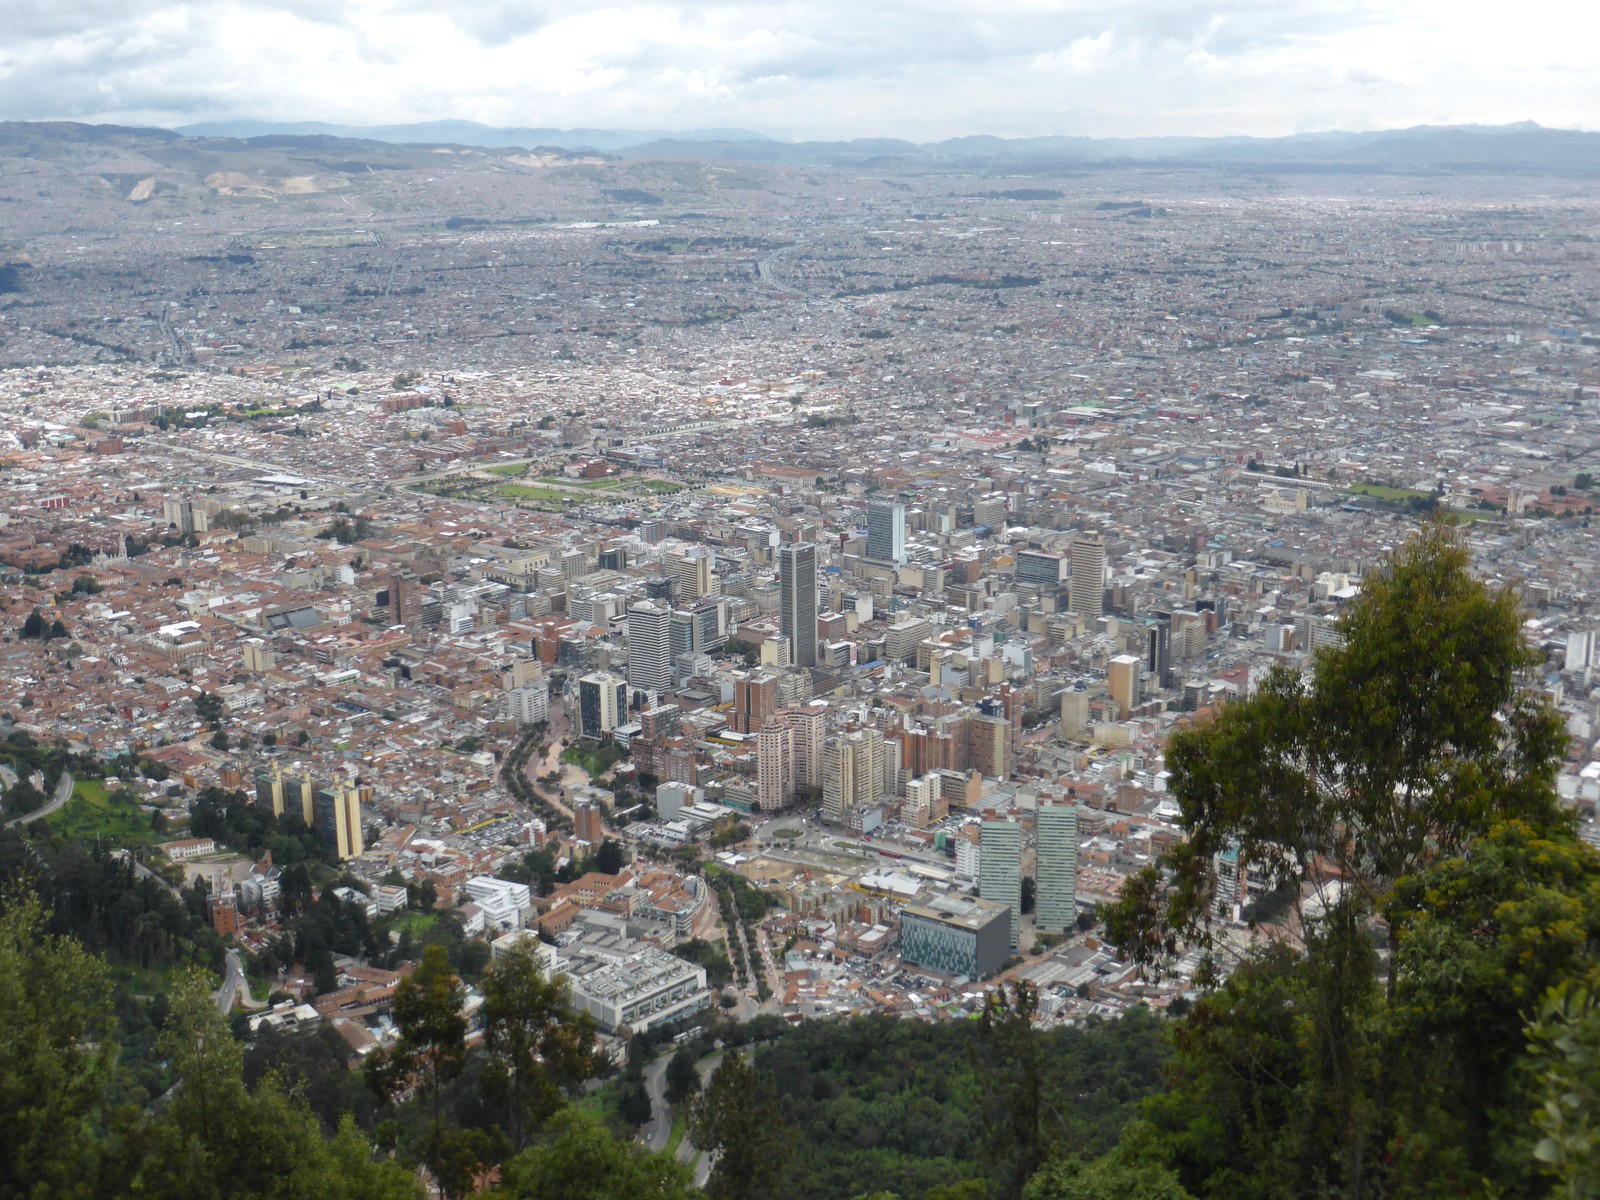 The view over central Bogotá from Cerro de Monserrate